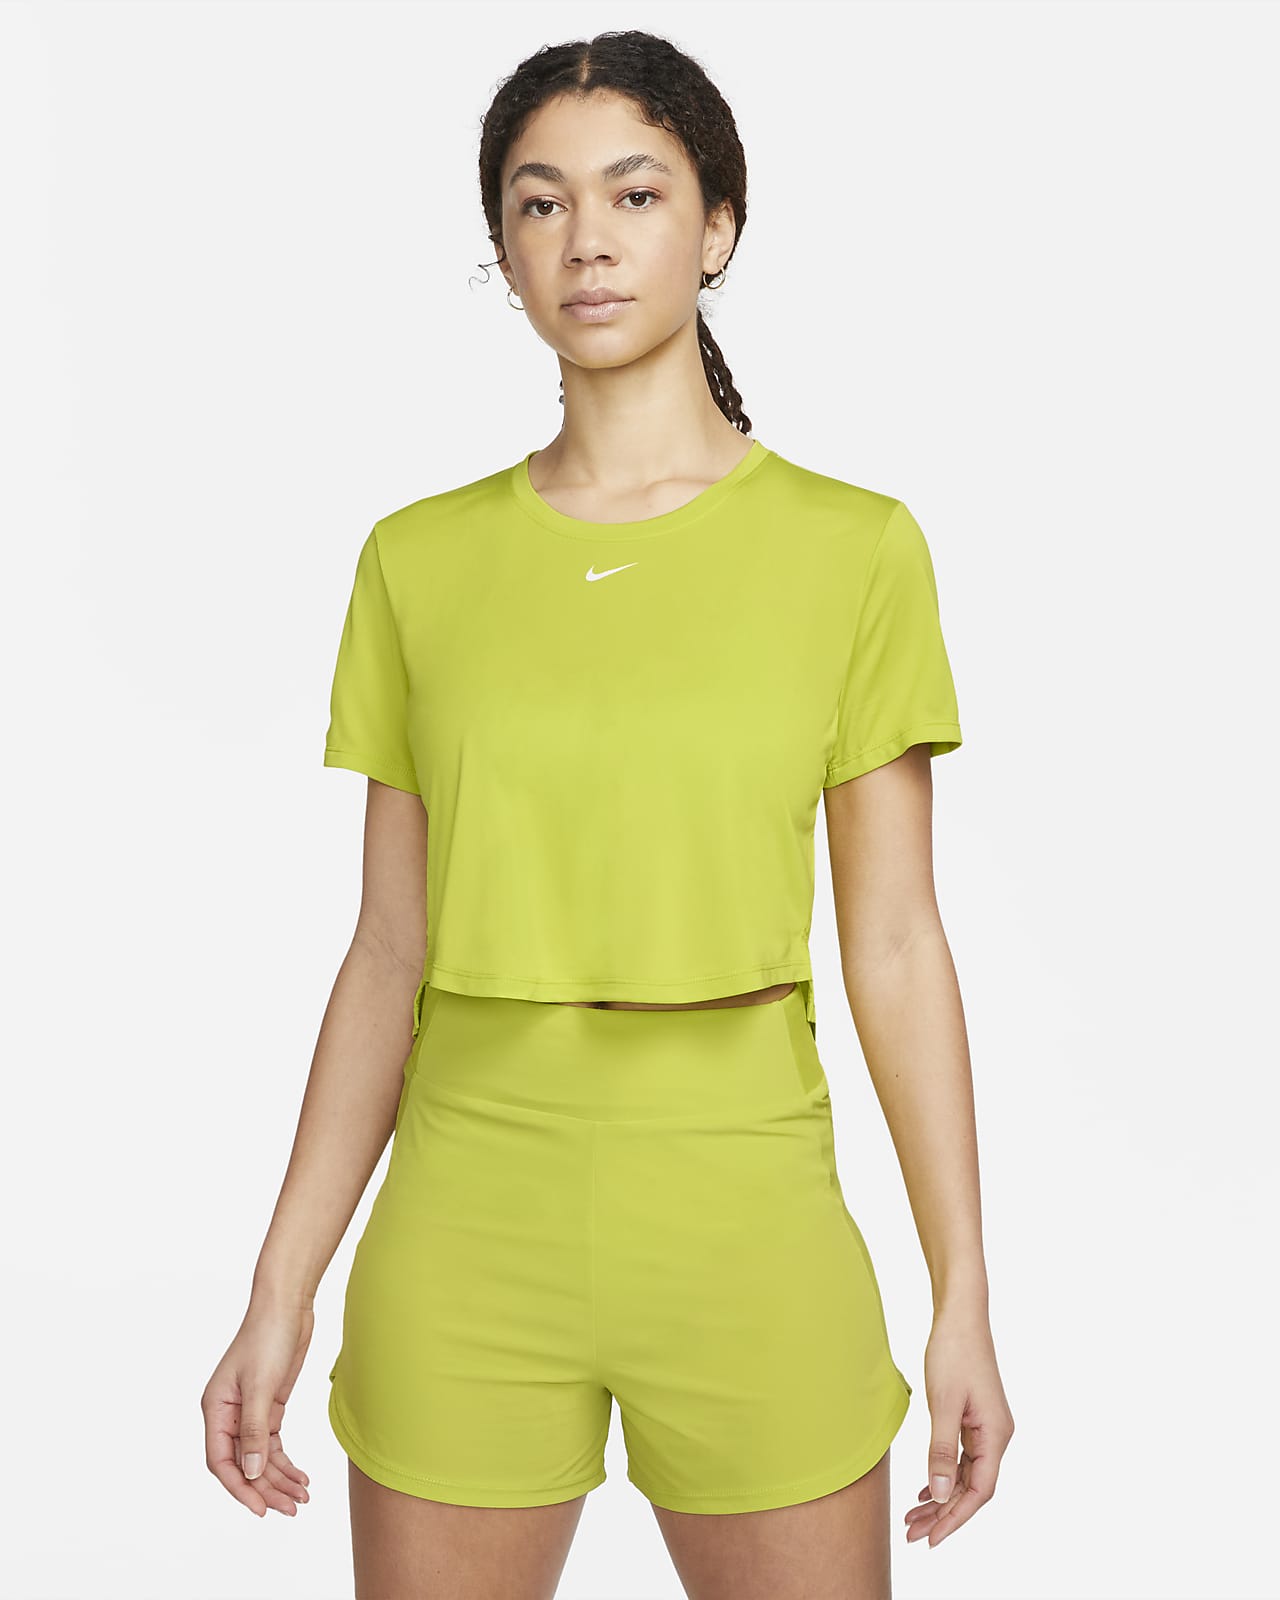 Dri-FIT One Women's Standard Fit Short-Sleeve Nike.com